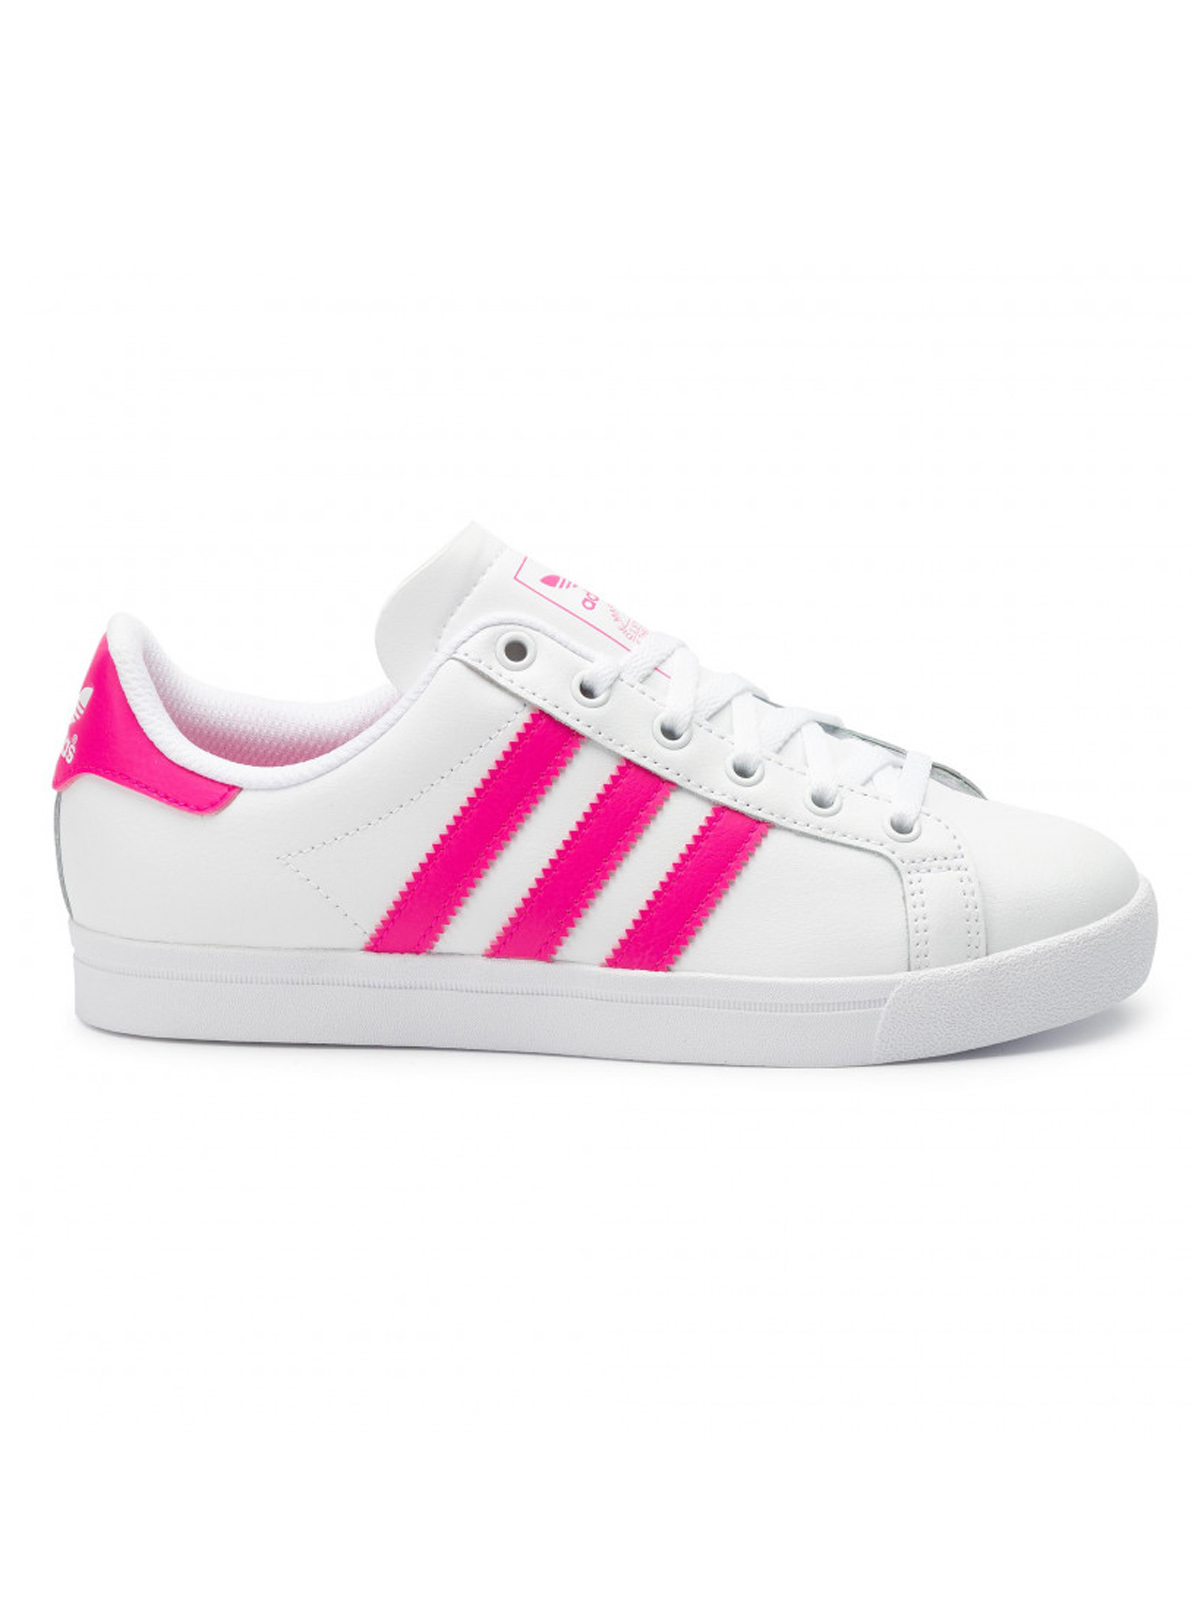 Adidas Coast Star J, розовый/белая